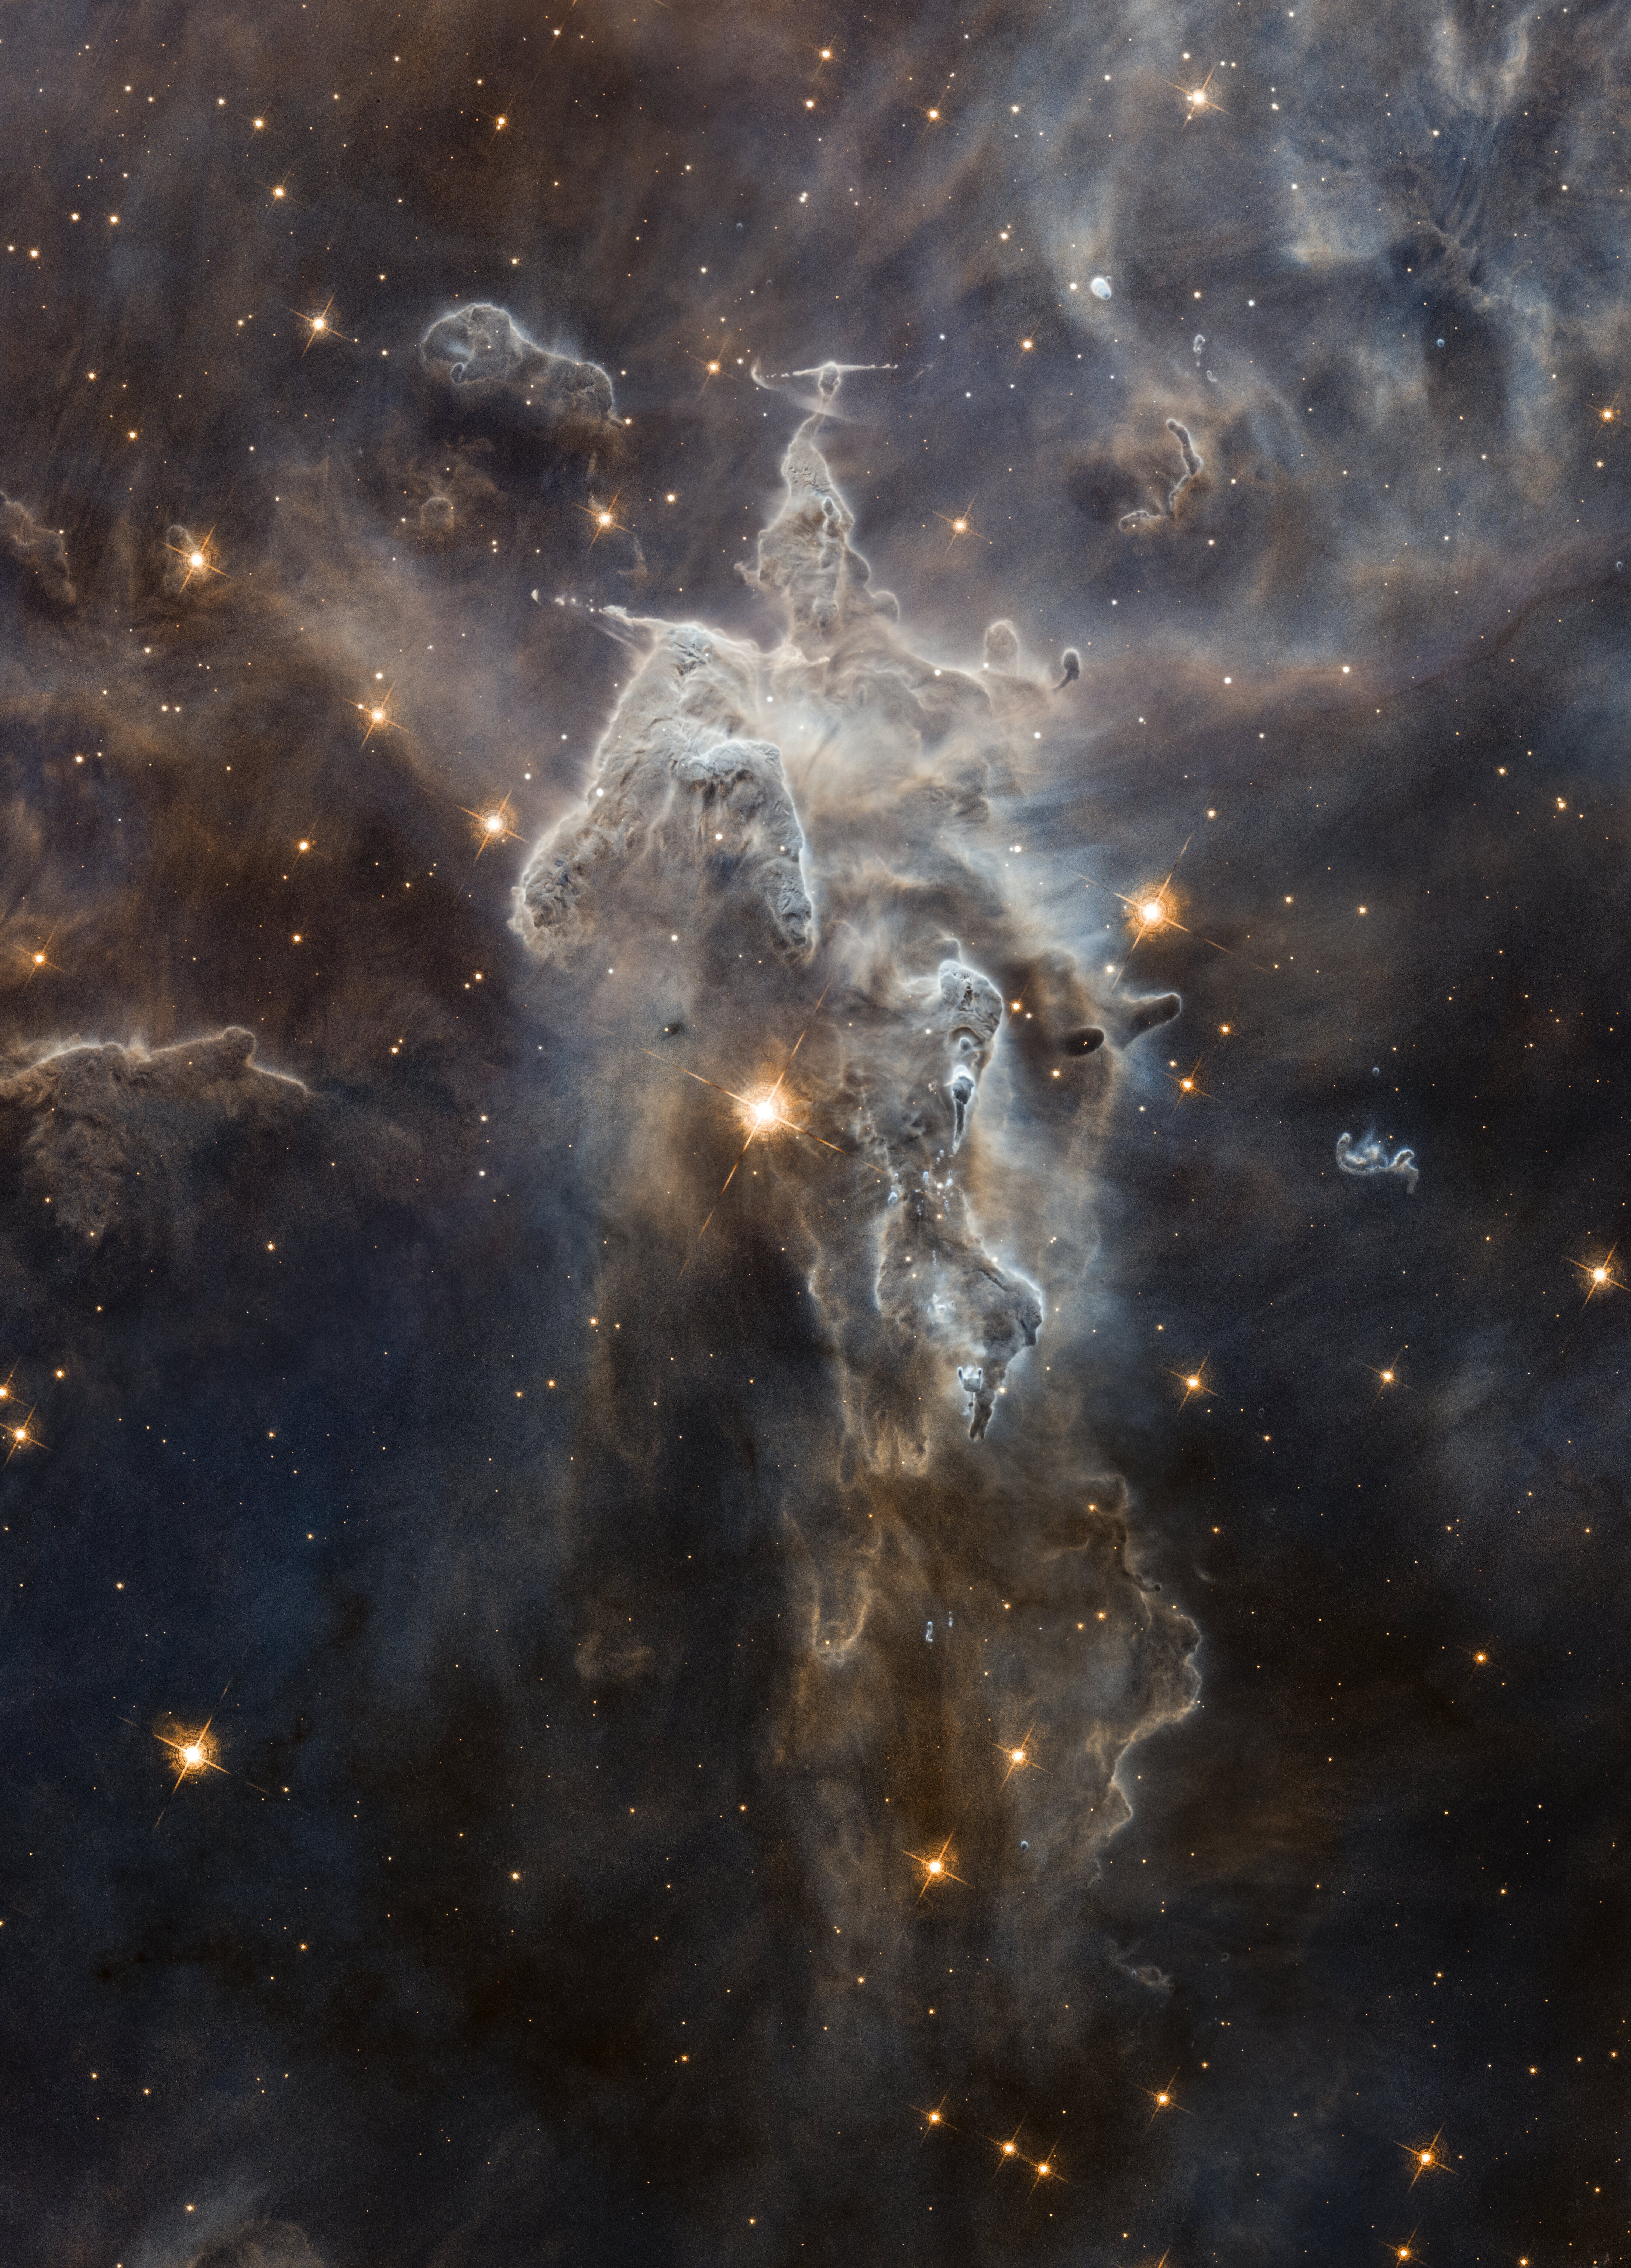 4k Nebula Photos